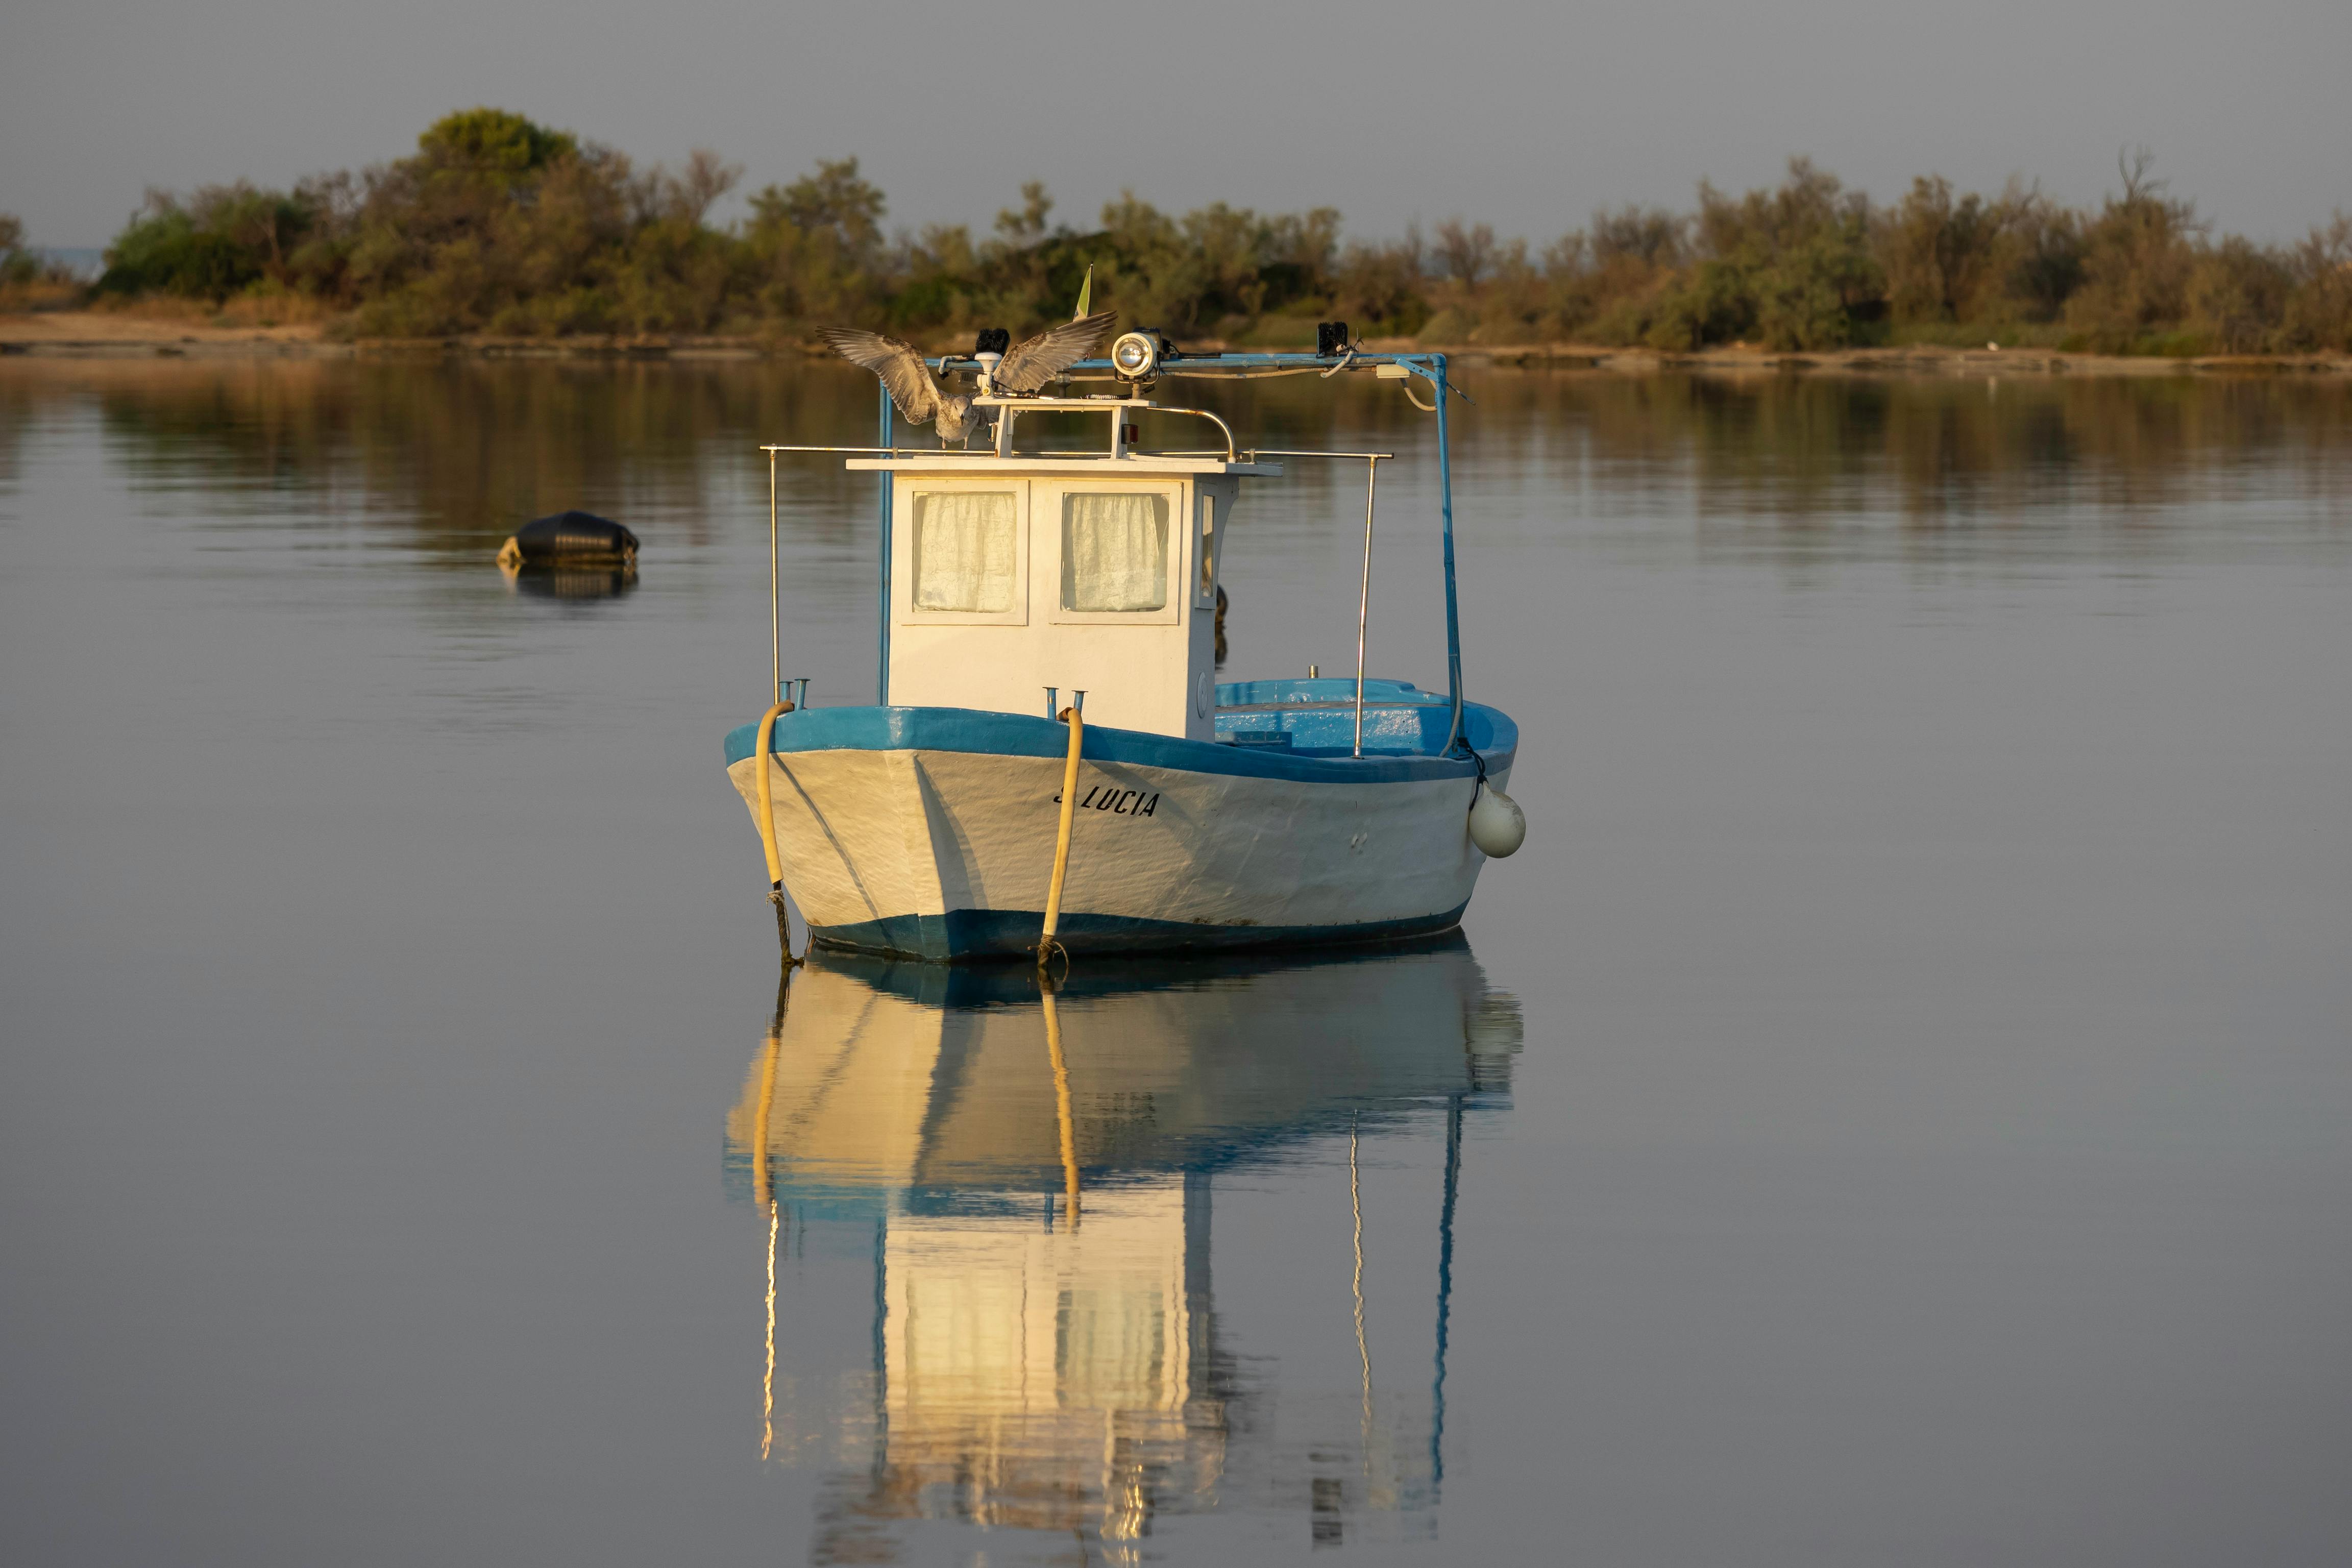 Green Boat on Lake · Free Stock Photo